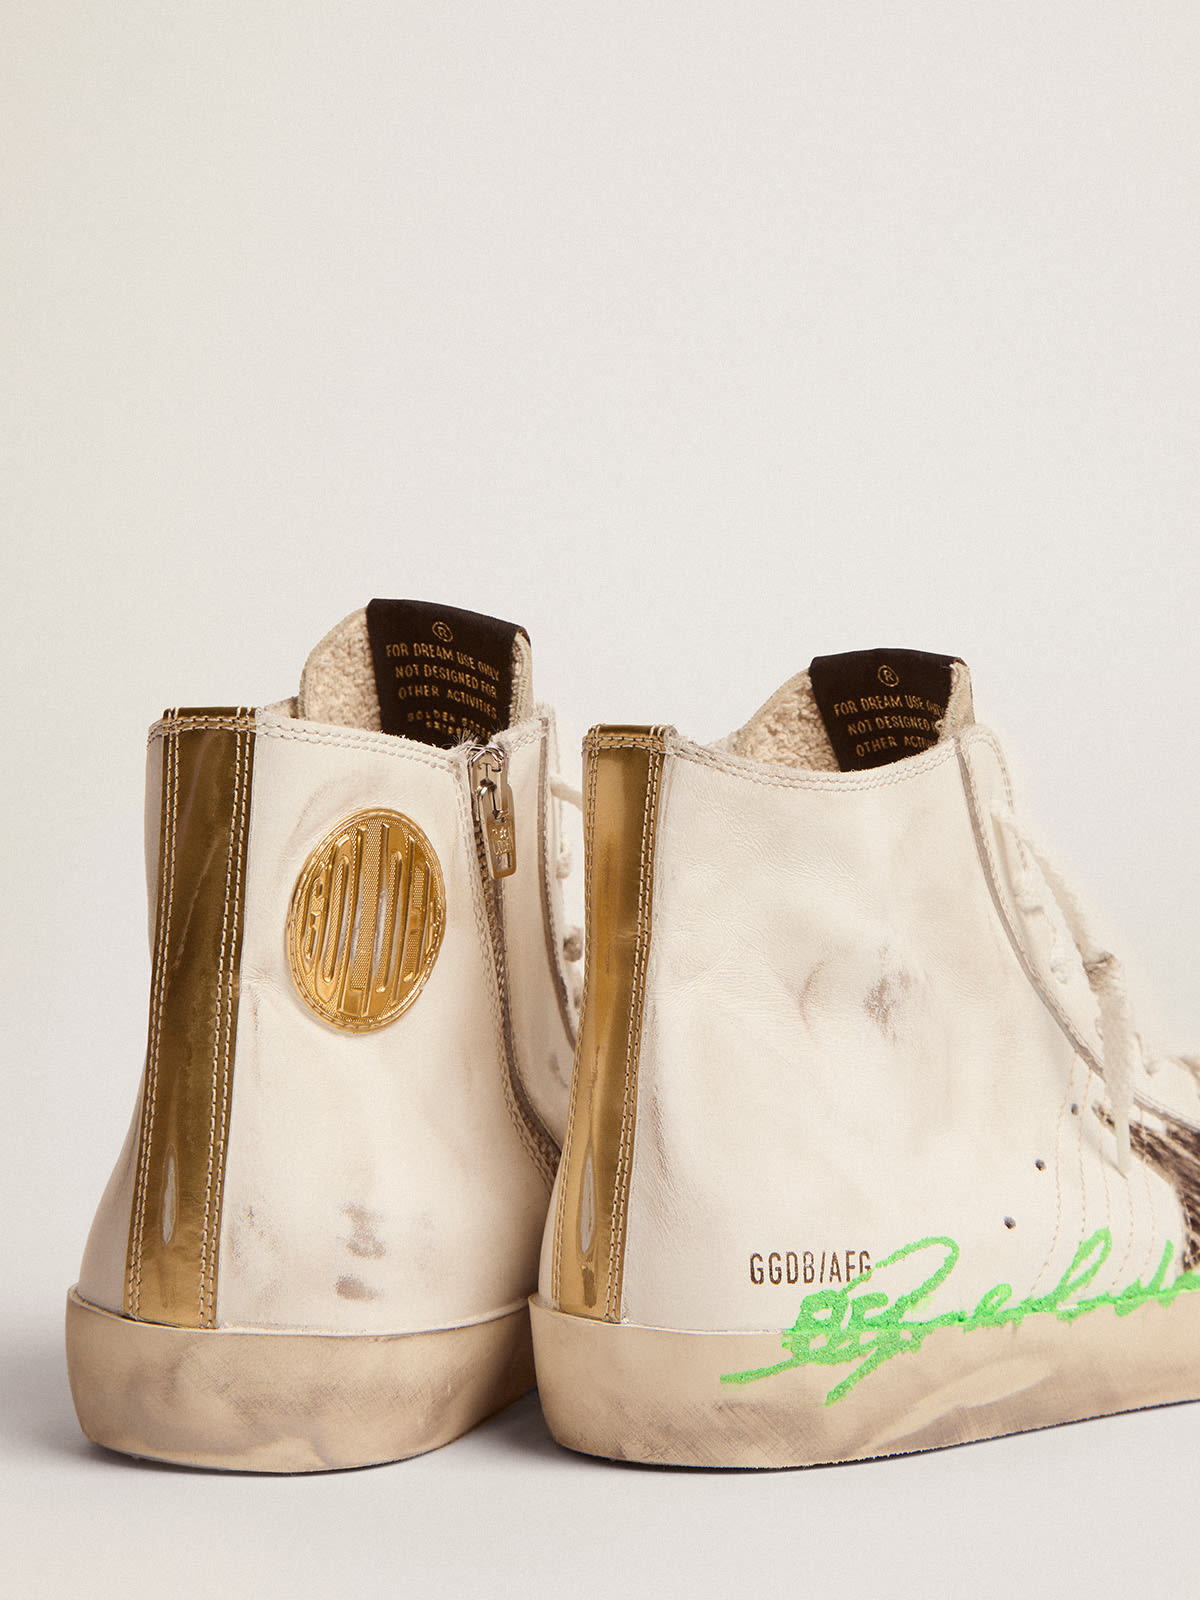 Golden Goose - Francy Penstar LTD sneakers in white leather with zebra-print pony skin star and green glitter logo in 